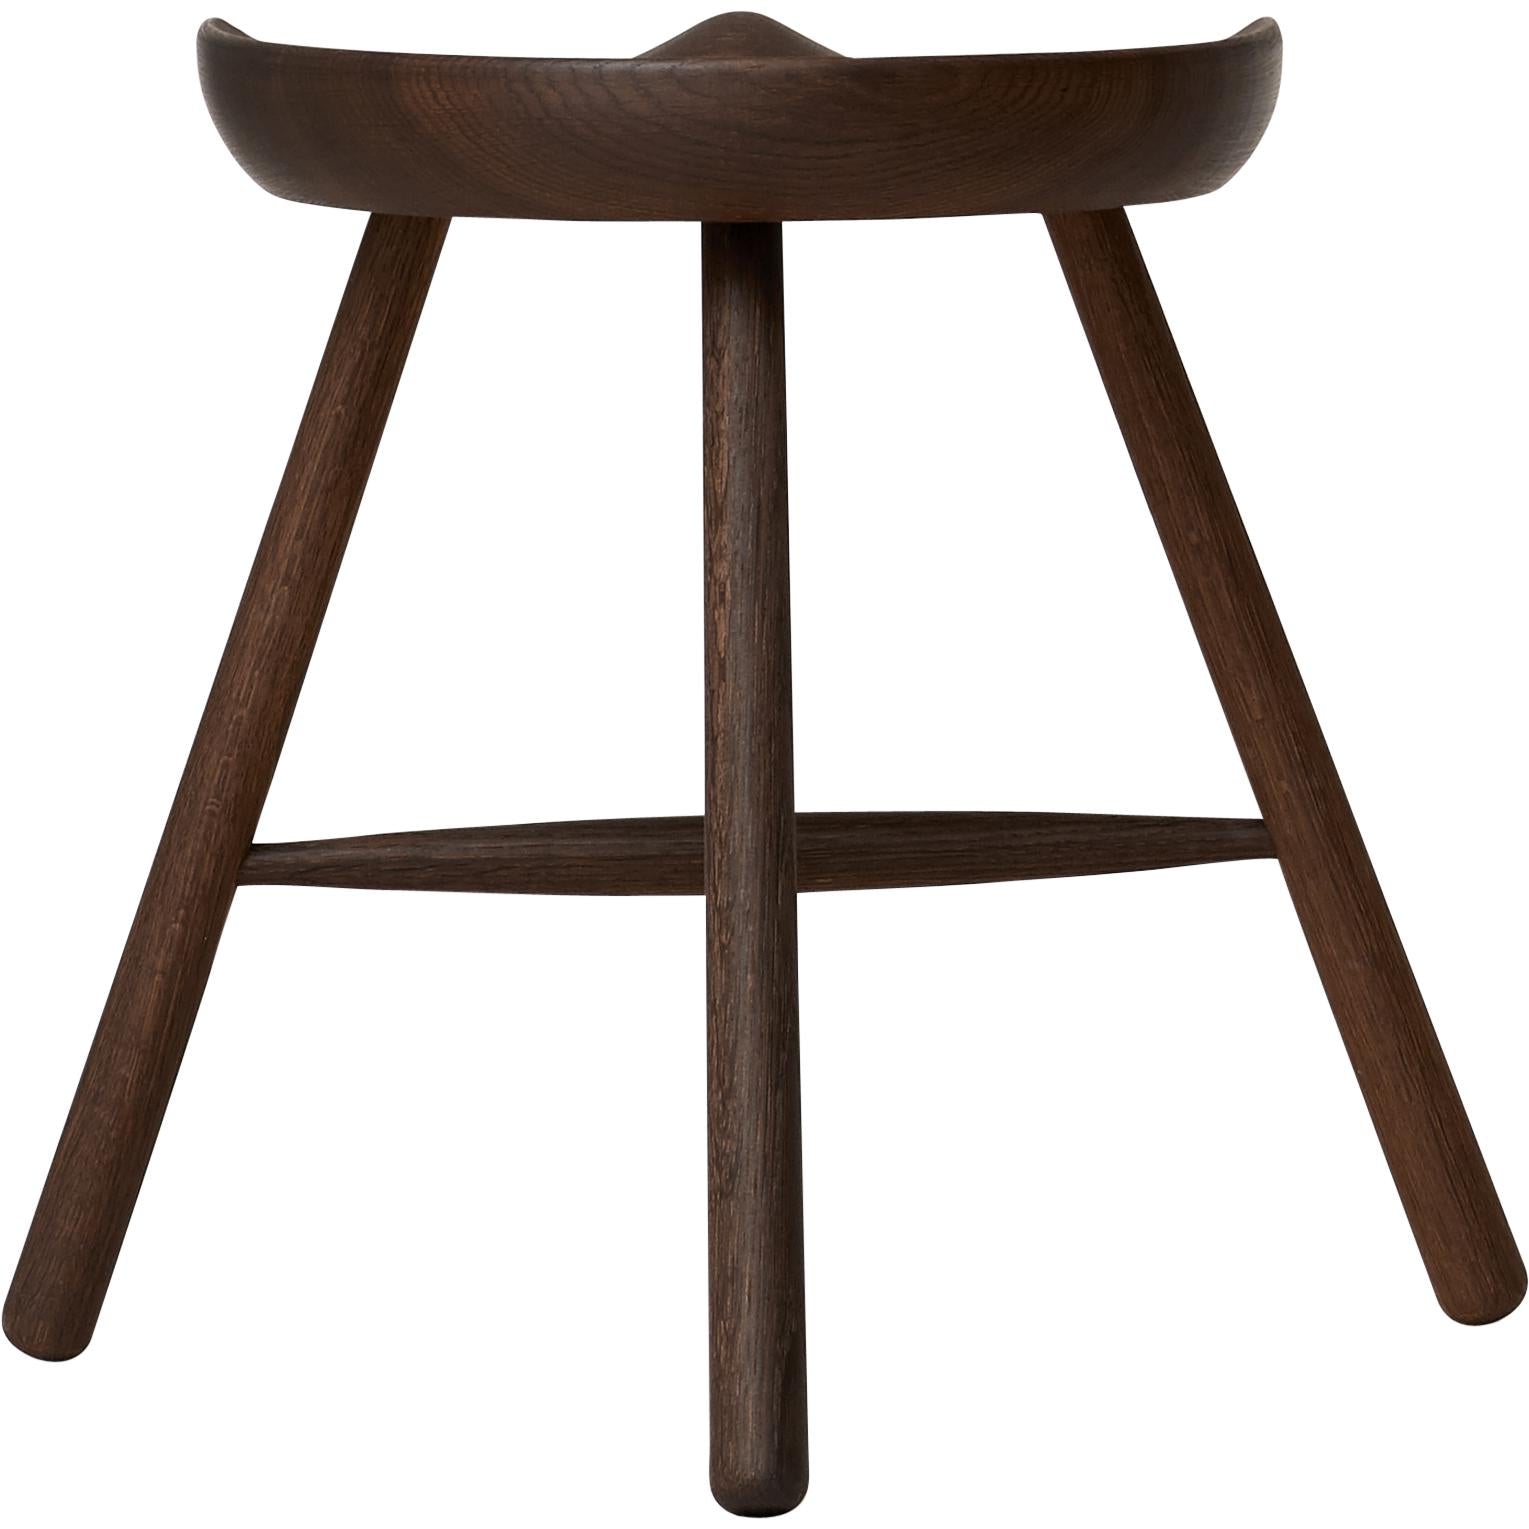 Form & Refine Shoemaker Chair No. 49. Smoked Oak